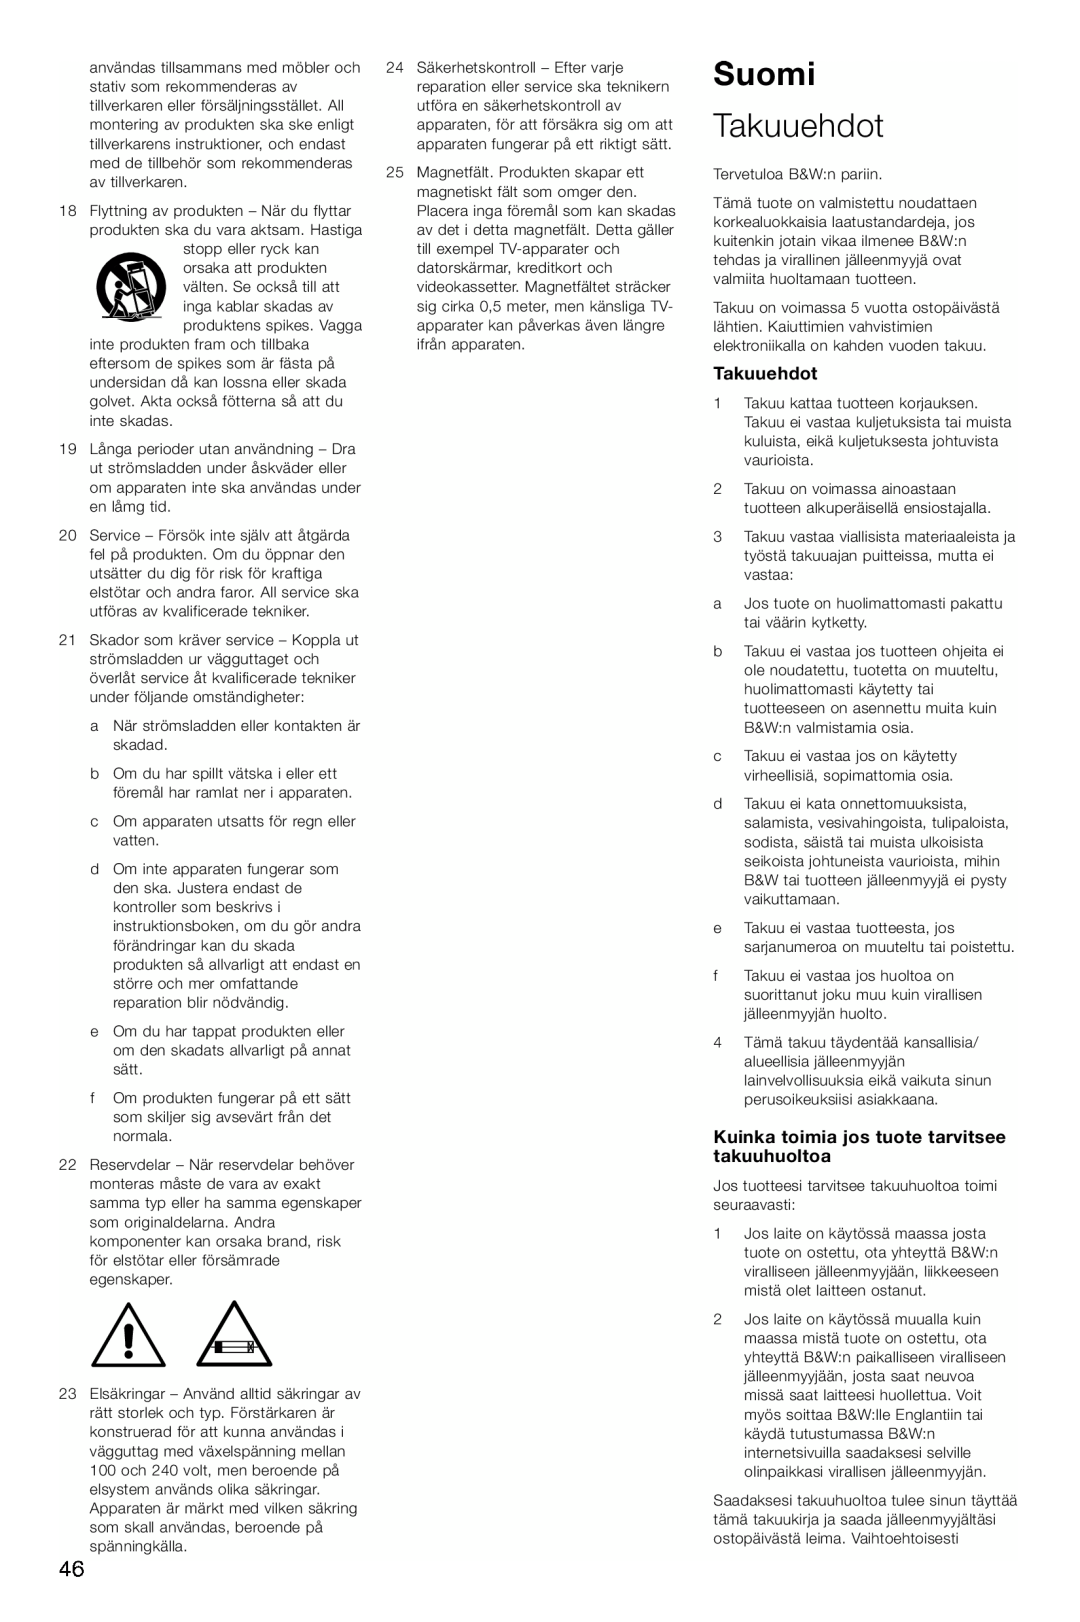 Bowers & Wilkins ASW CDM owner manual Suomi, Takuuehdot, Kuinka toimia jos tuote tarvitsee takuuhuoltoa 